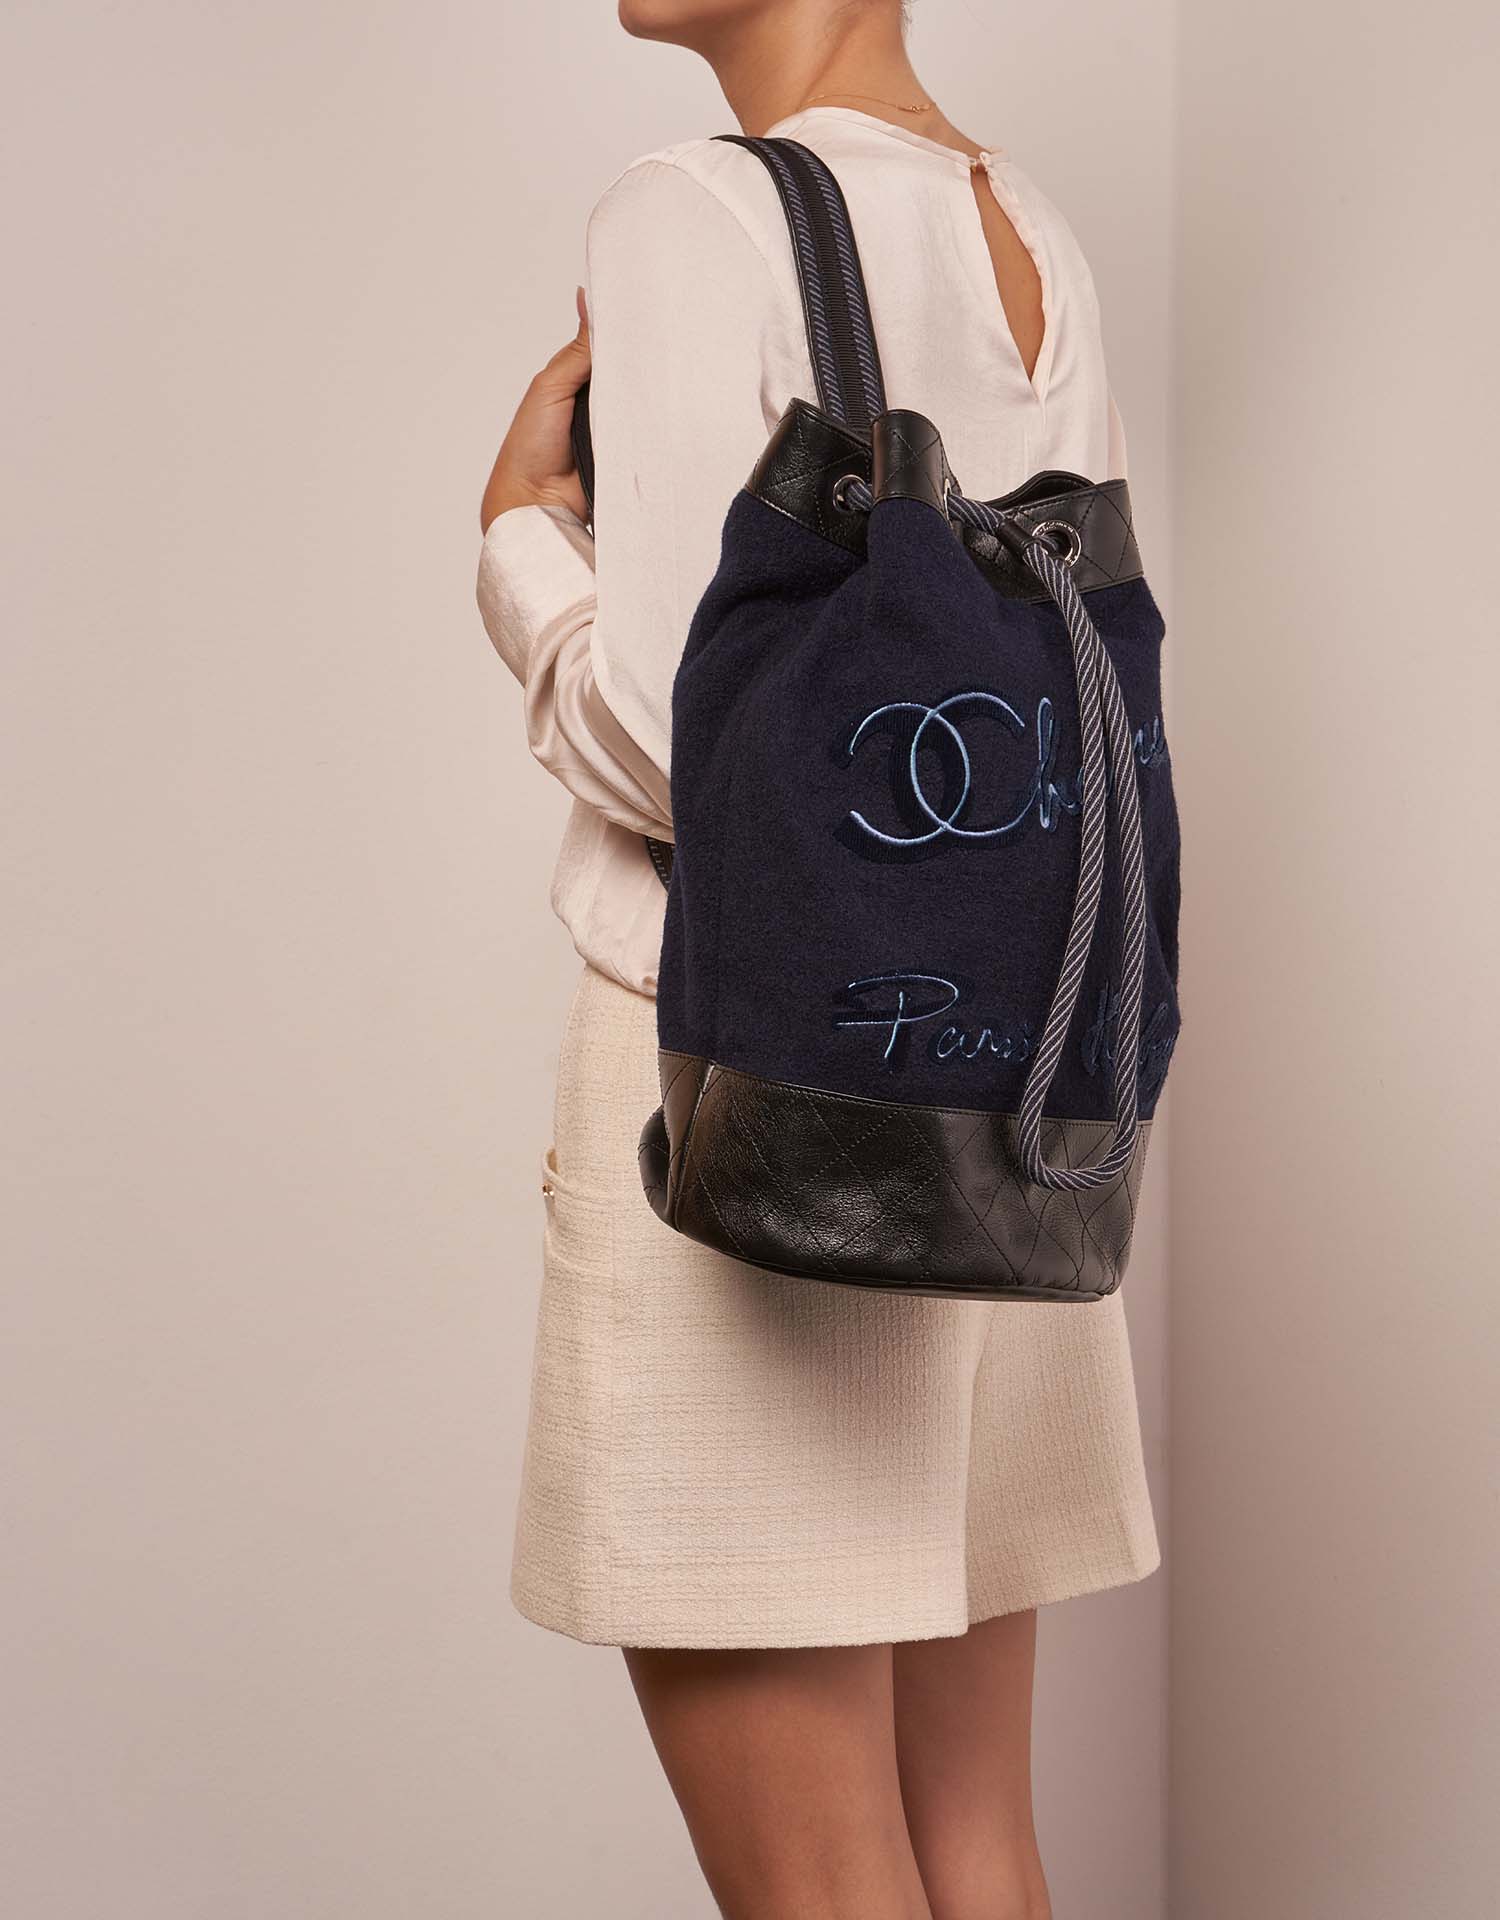 Chanel Backpack Blue-Black Sizes Worn | Sell your designer bag on Saclab.com